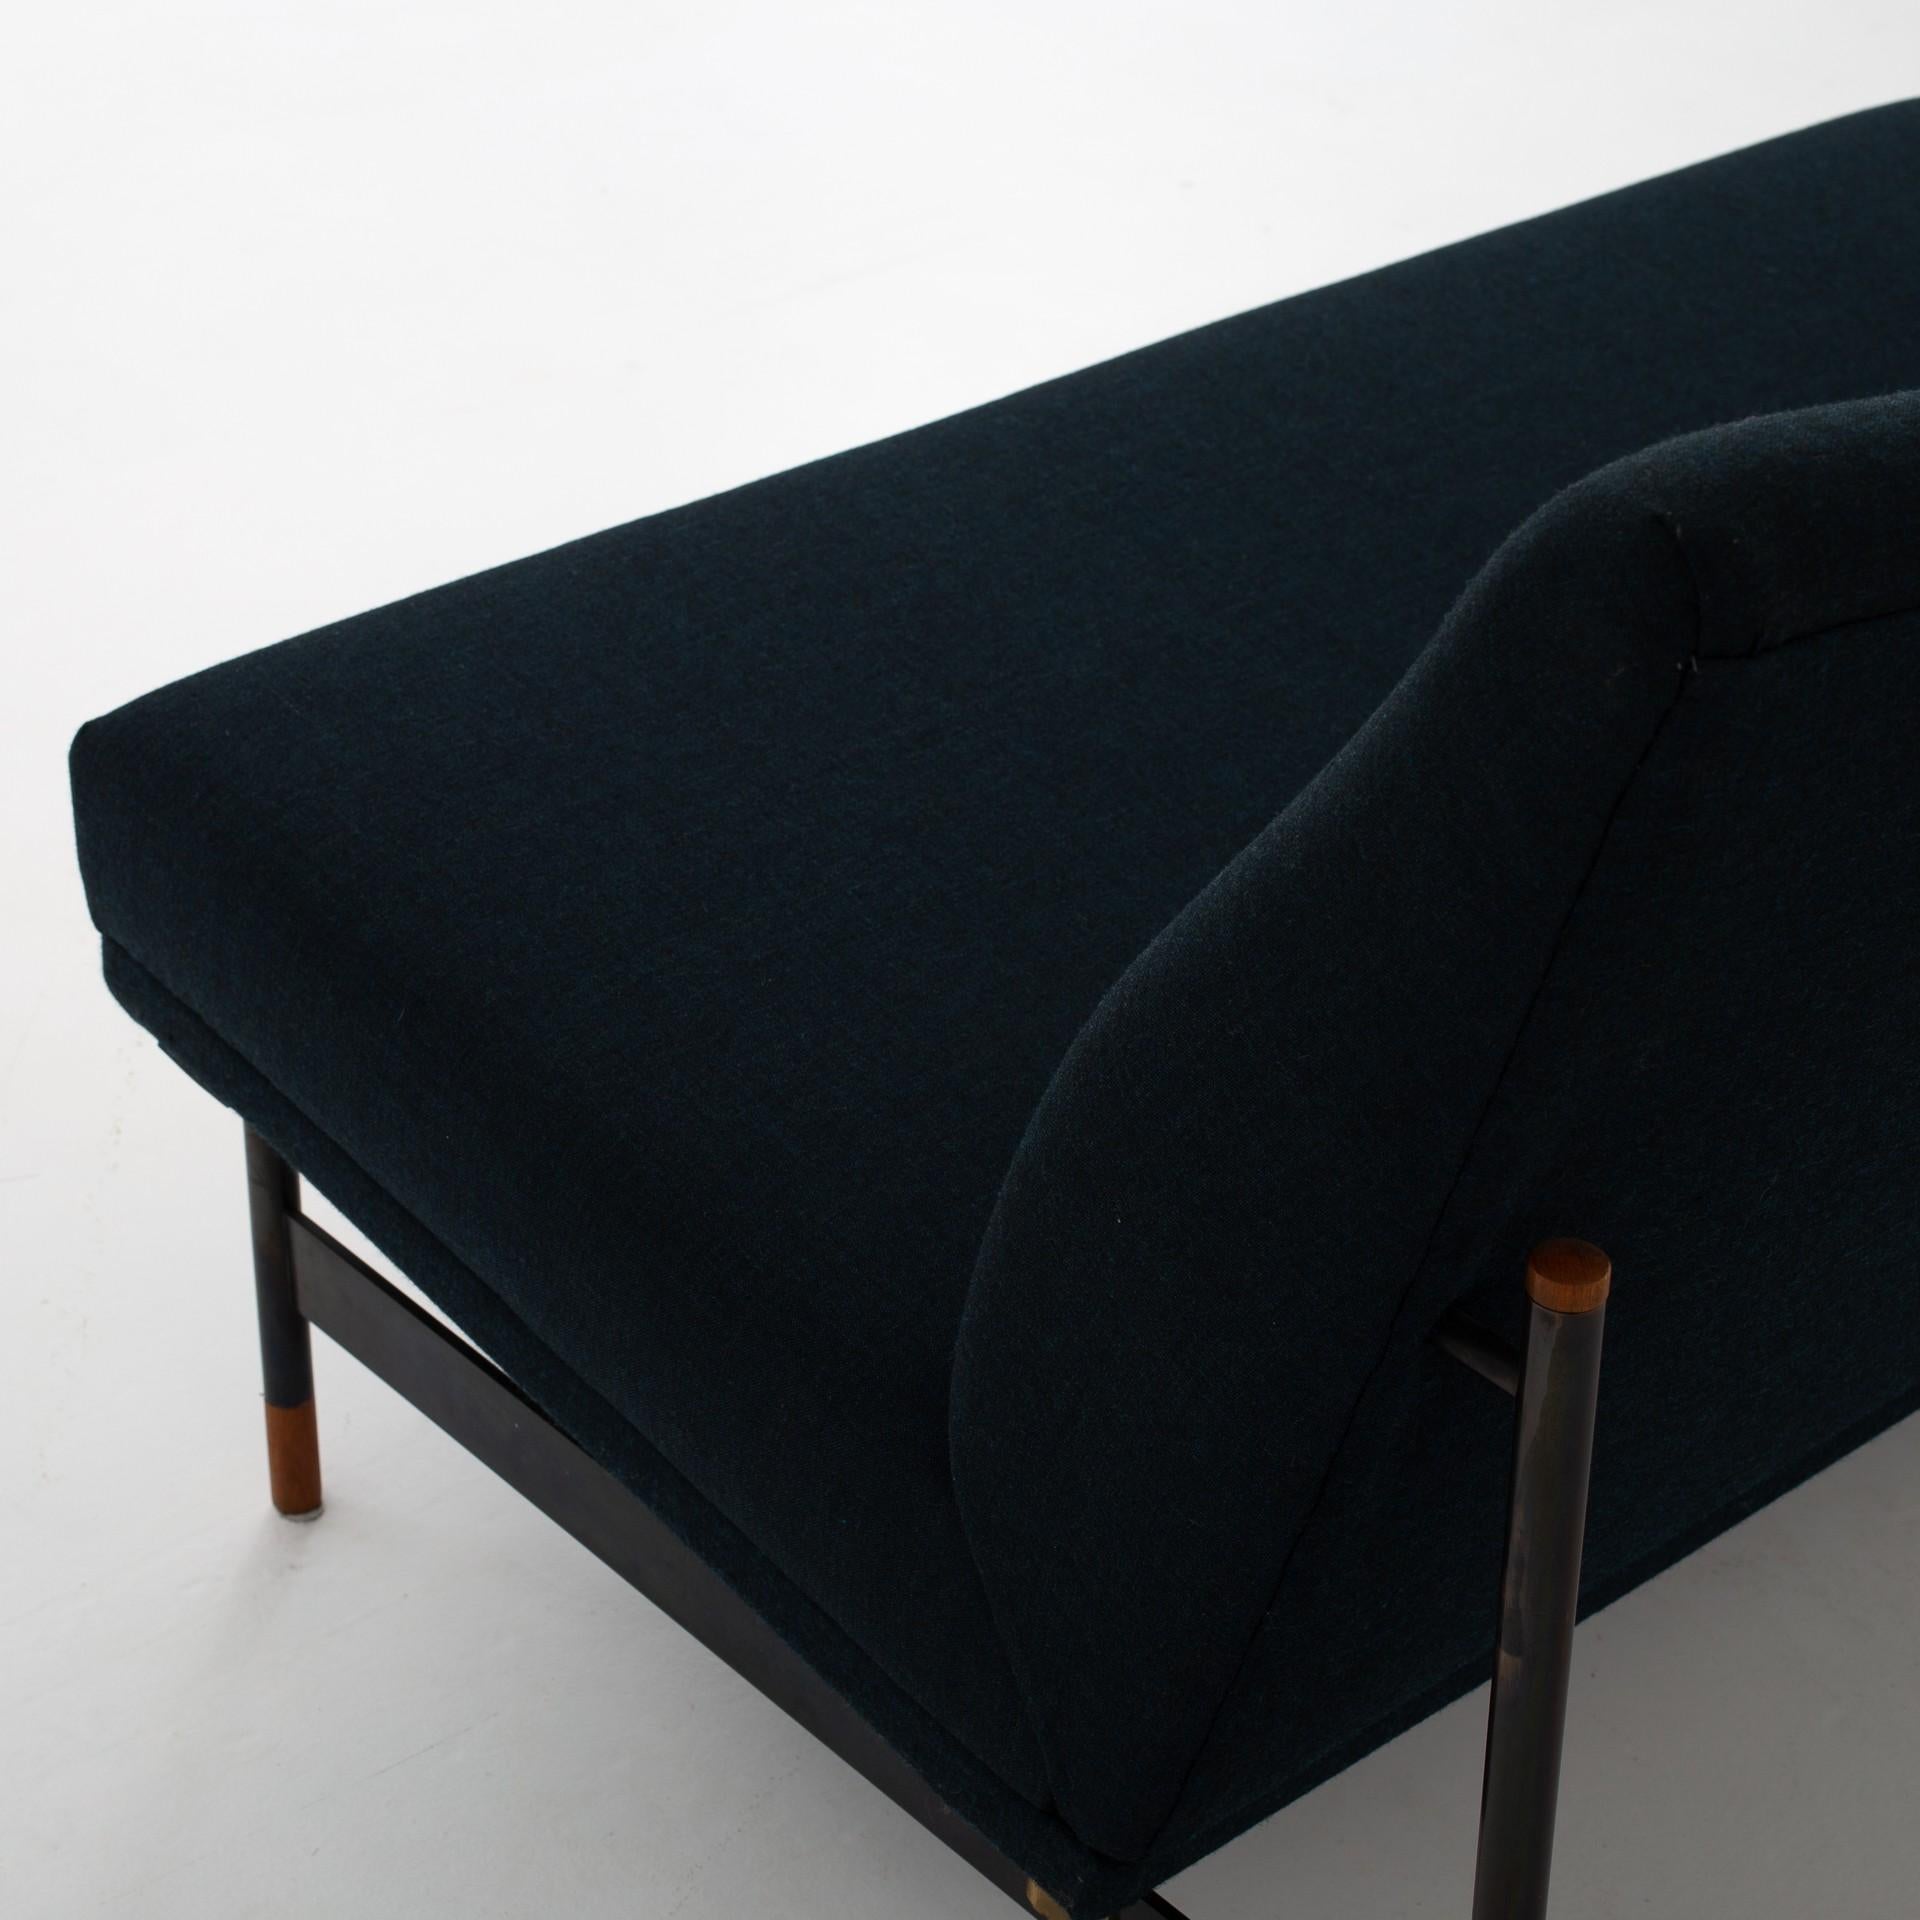 Two-Seat Sofa by Finn Juhl 1